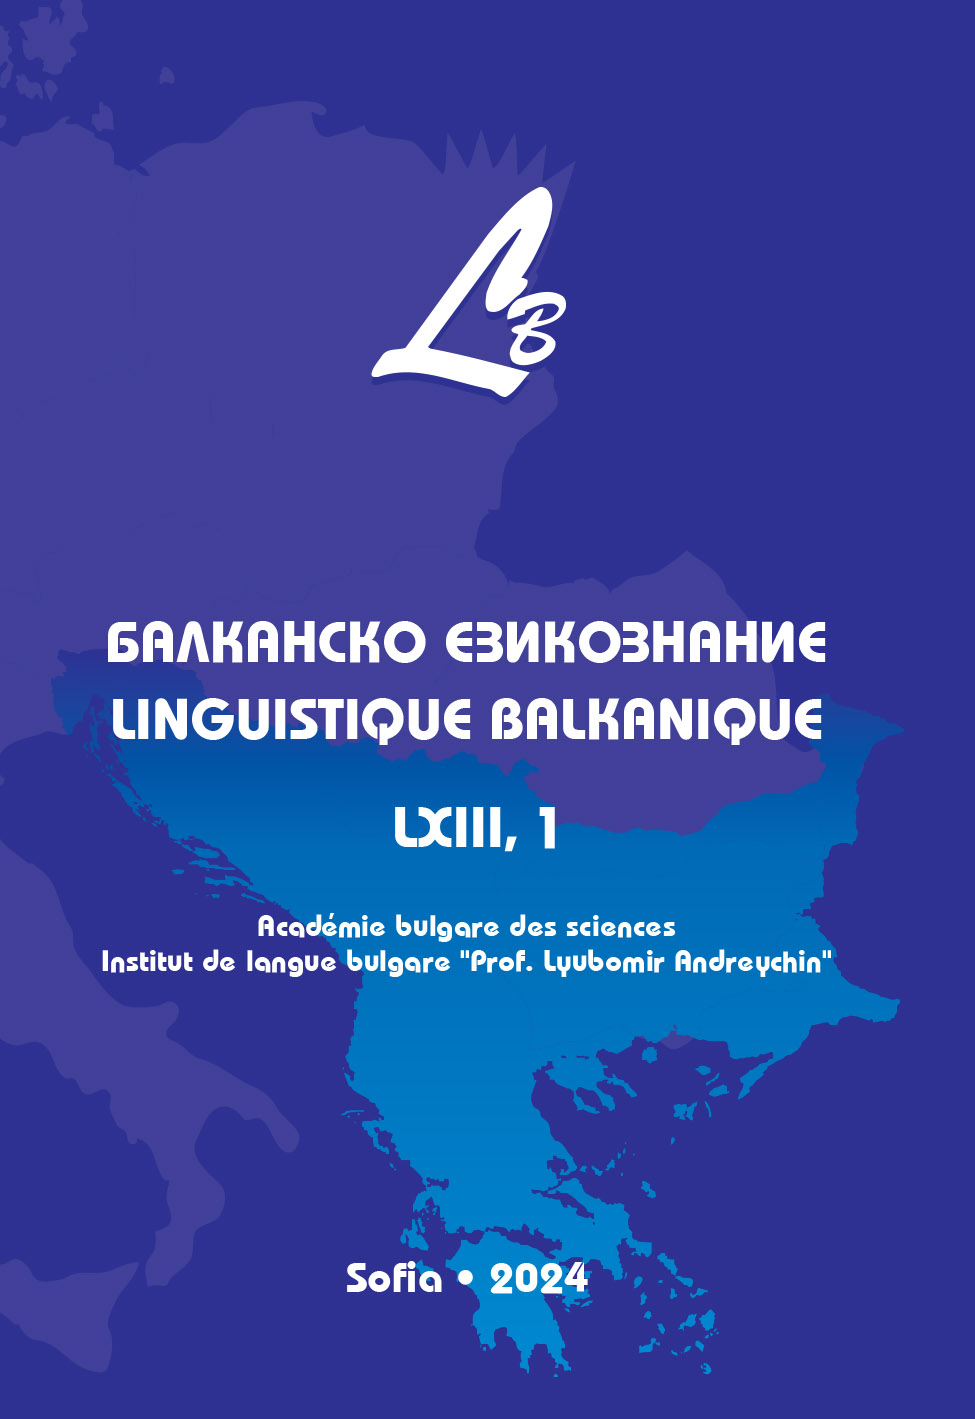 On the Etymology of the Middle Bulgarian Anthroponyms Асѣнь (Asěn) and БѣлгꙊнь (Bělgun)